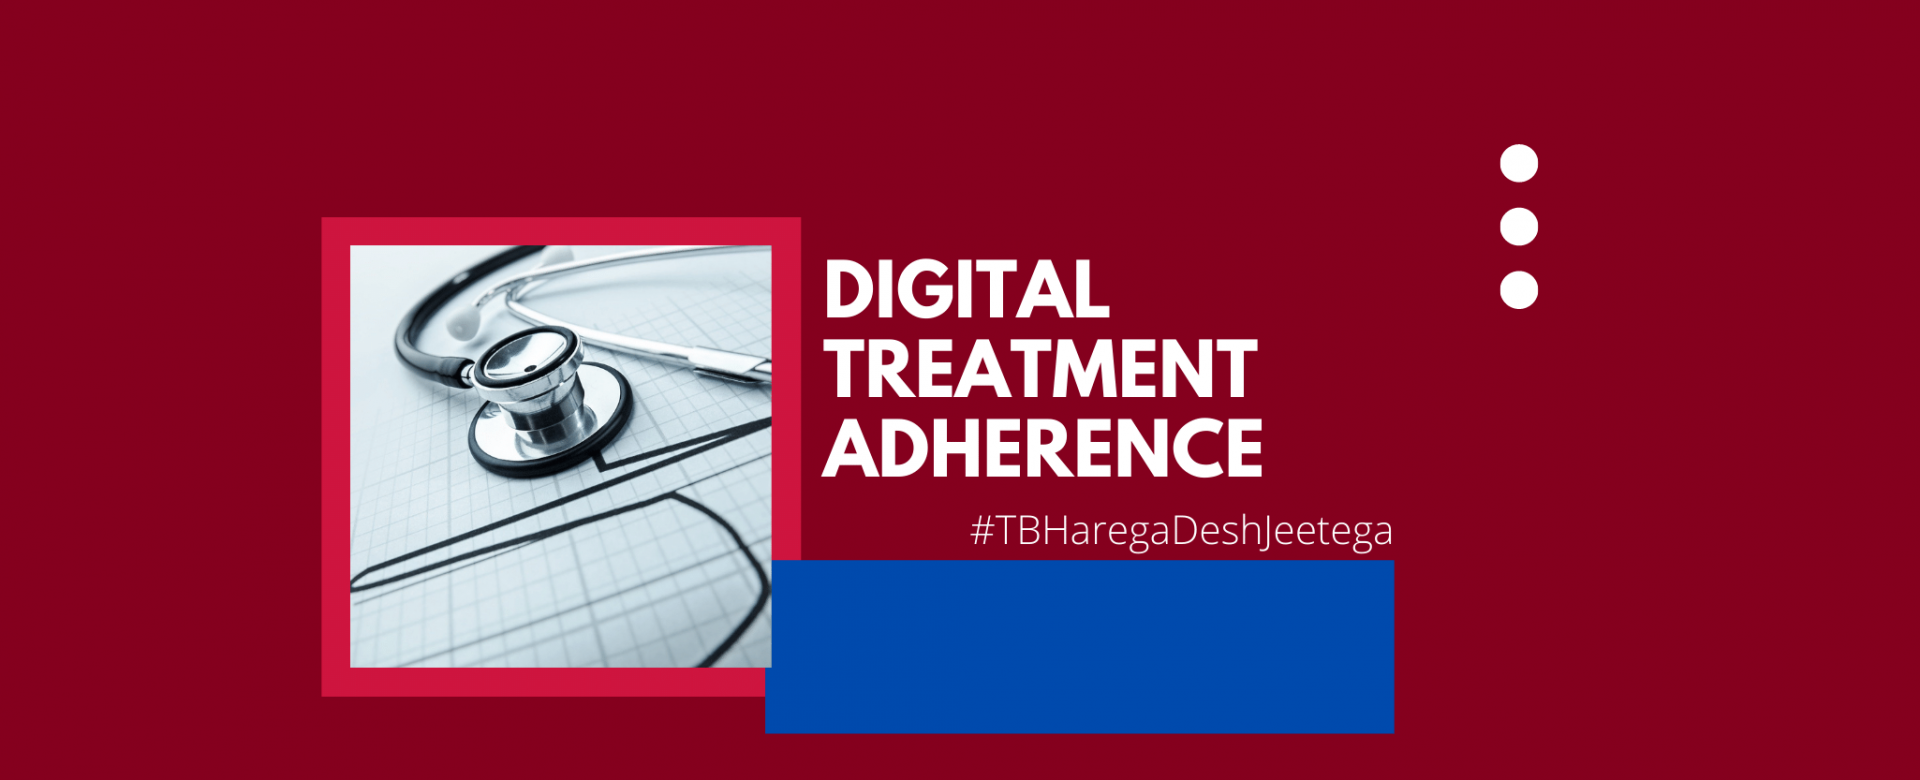 Digital Treatment Adherence